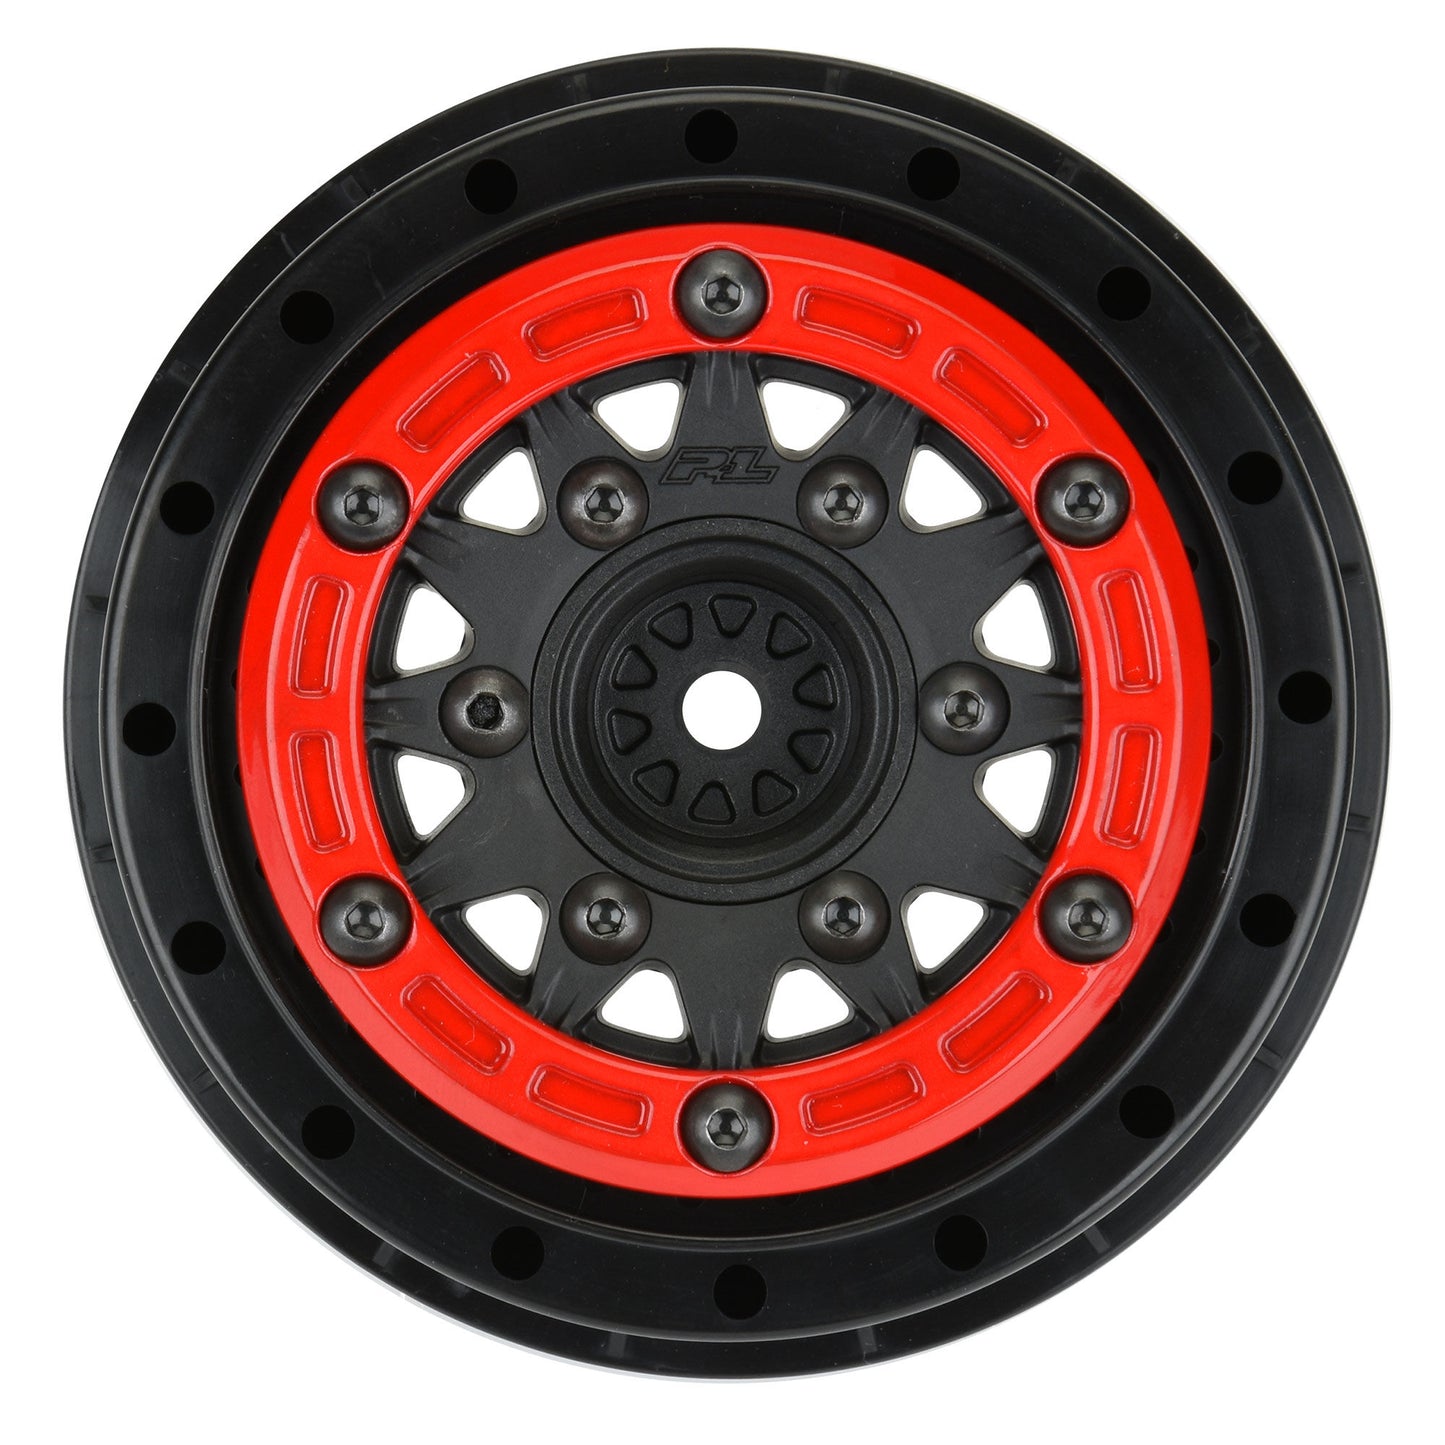 Pro-Line Racing 2811-04 Raid Bead-Loc 2.2/3.0" Short Course Red/Black Wheels